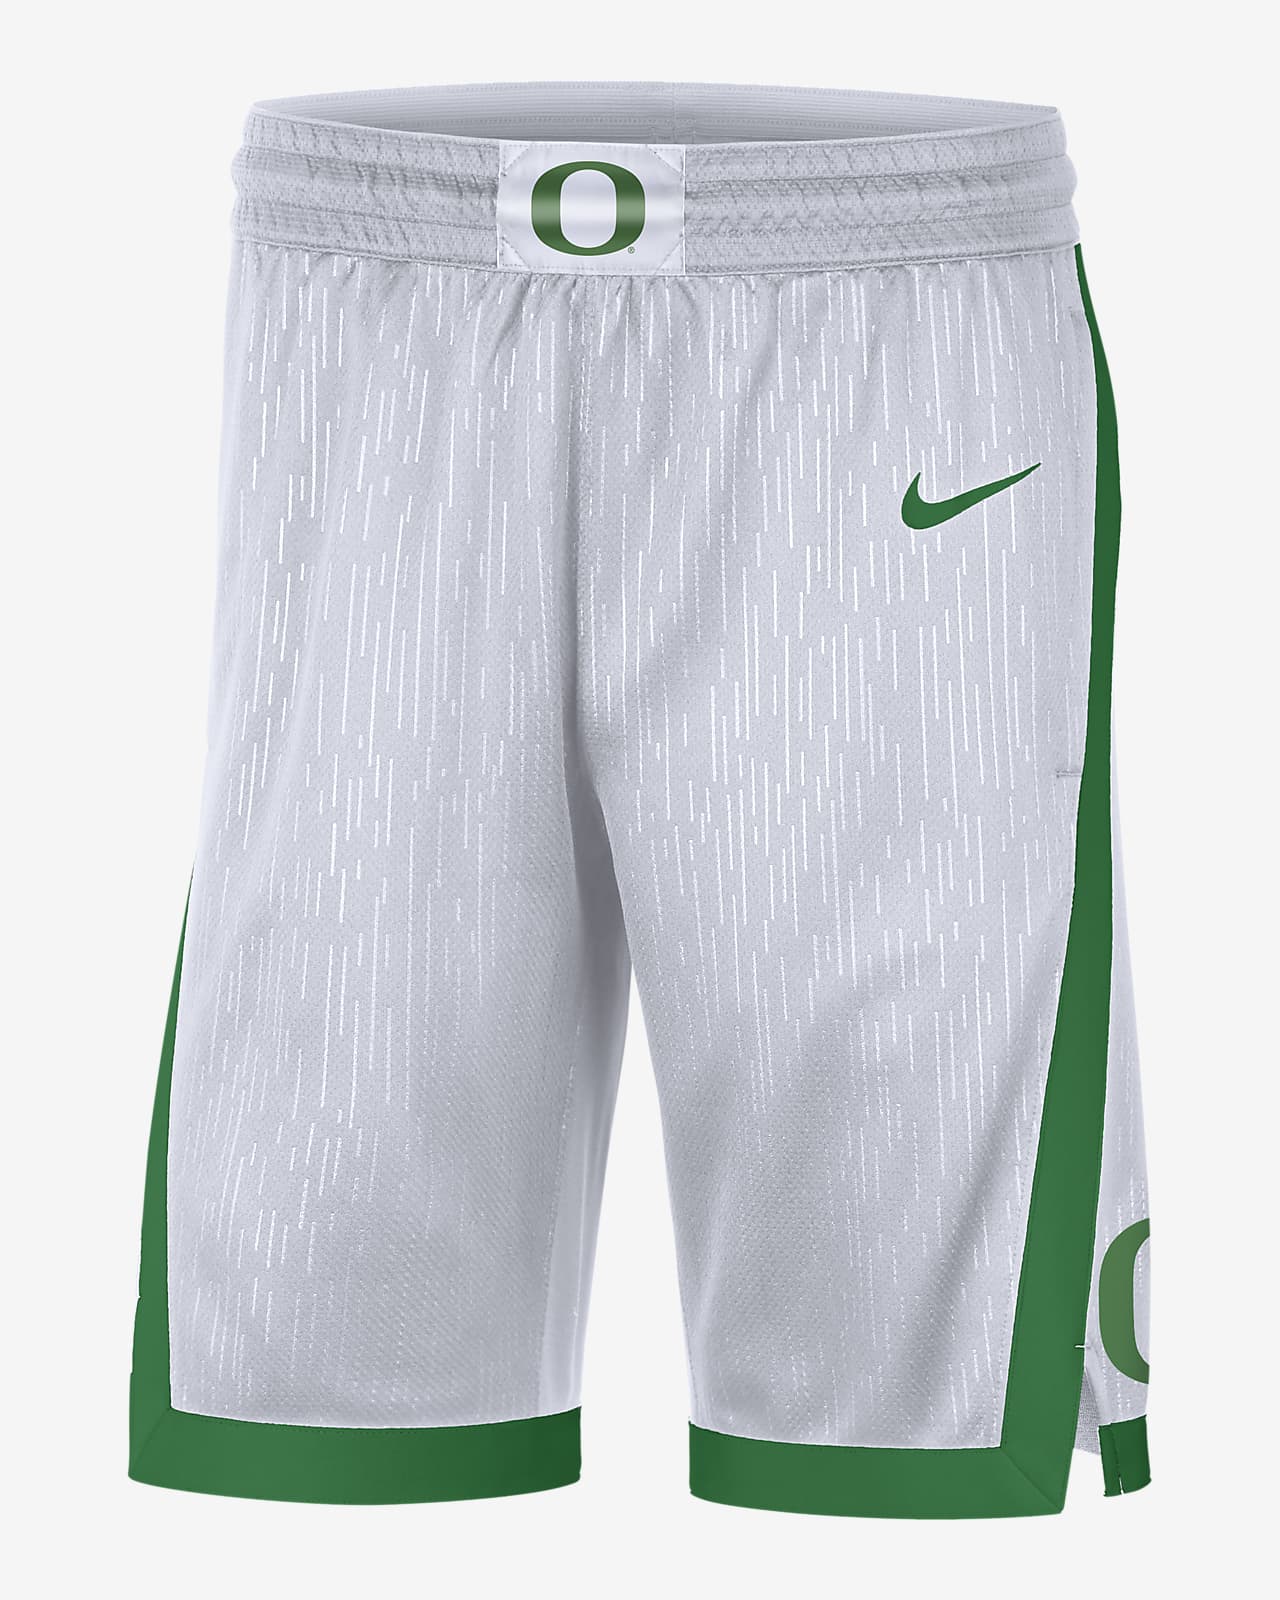 Nike College (Oregon) Men's Replica Basketball Shorts